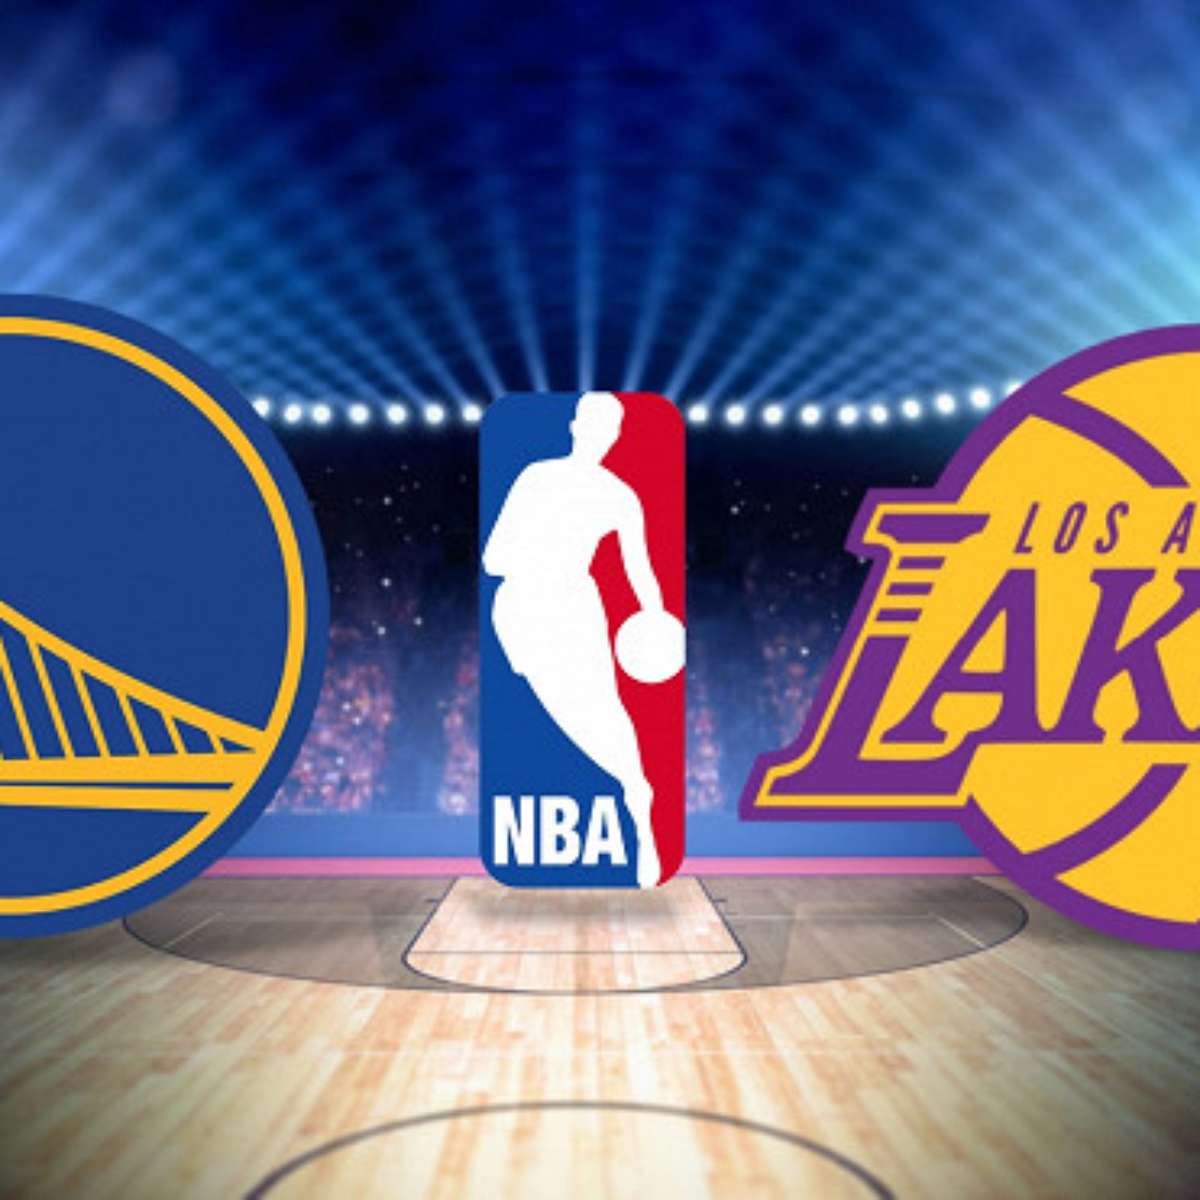 Lakers x Warriors ao vivo na NBA: onde assistir jogo 5 hoje e